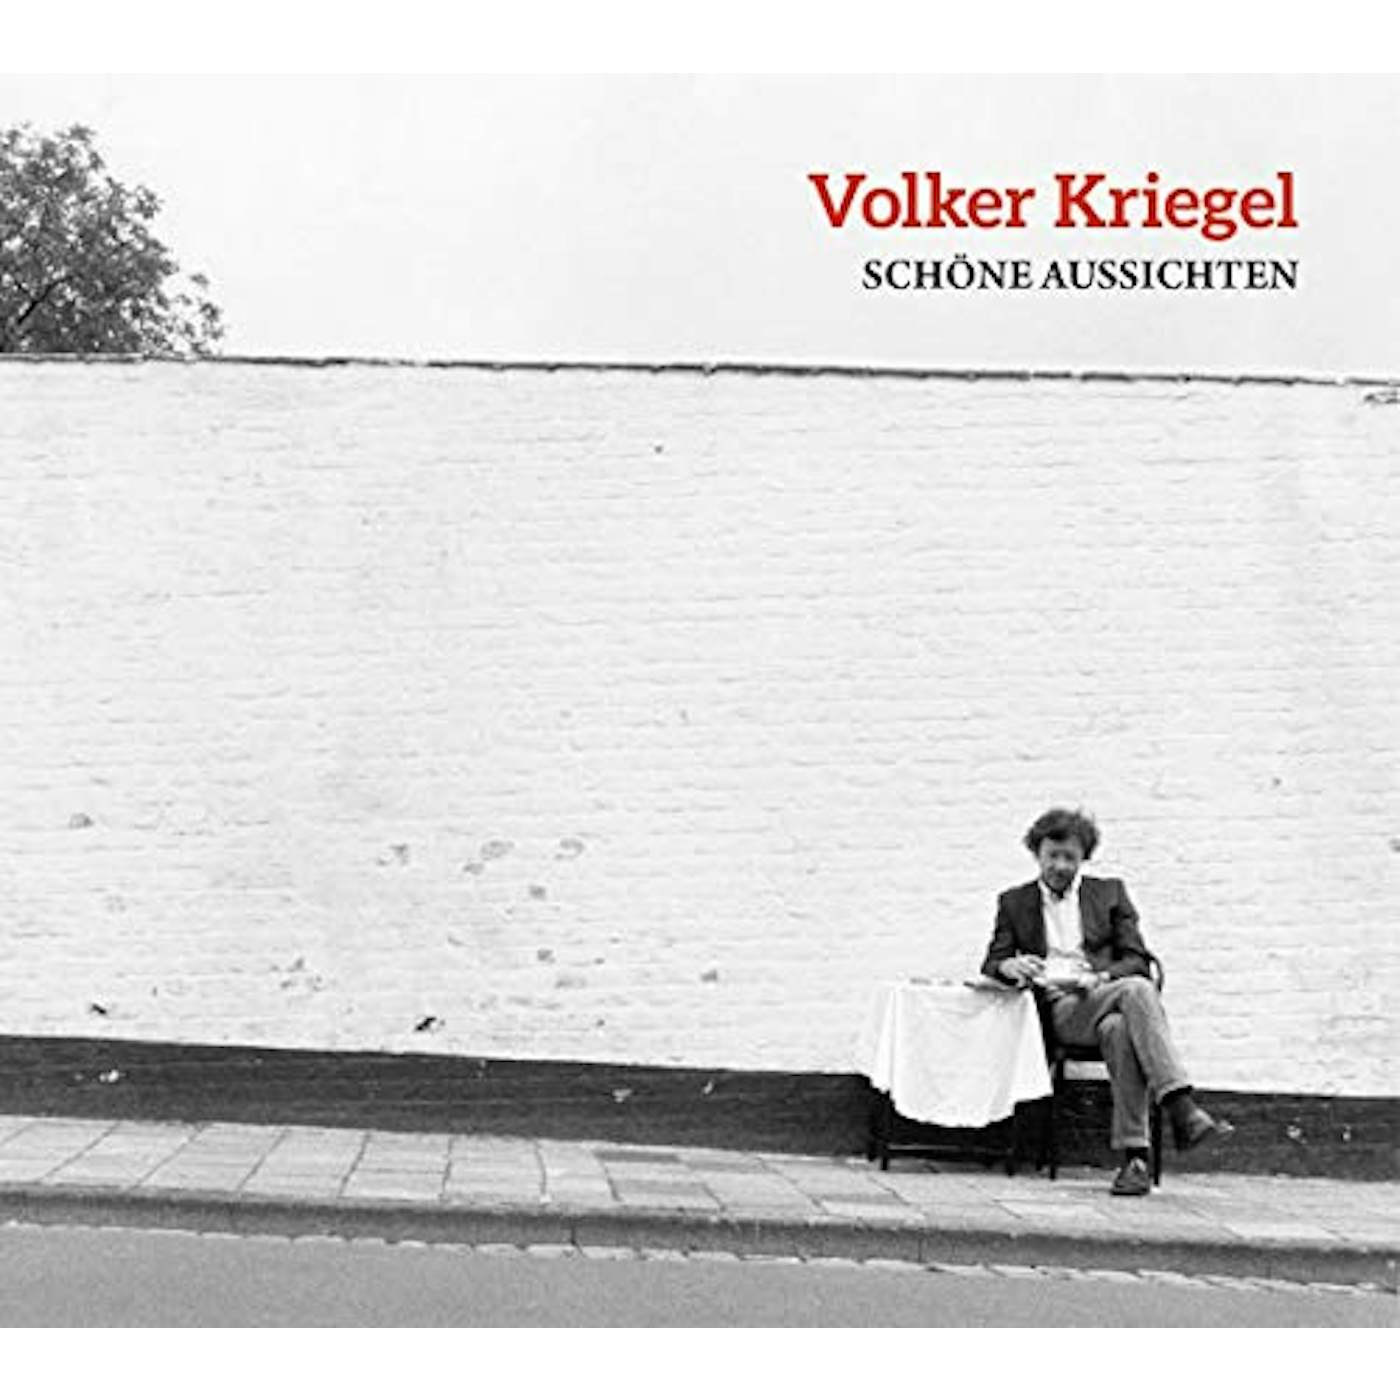 Volker Kriegel SCHONE AUSSICHTEN CD